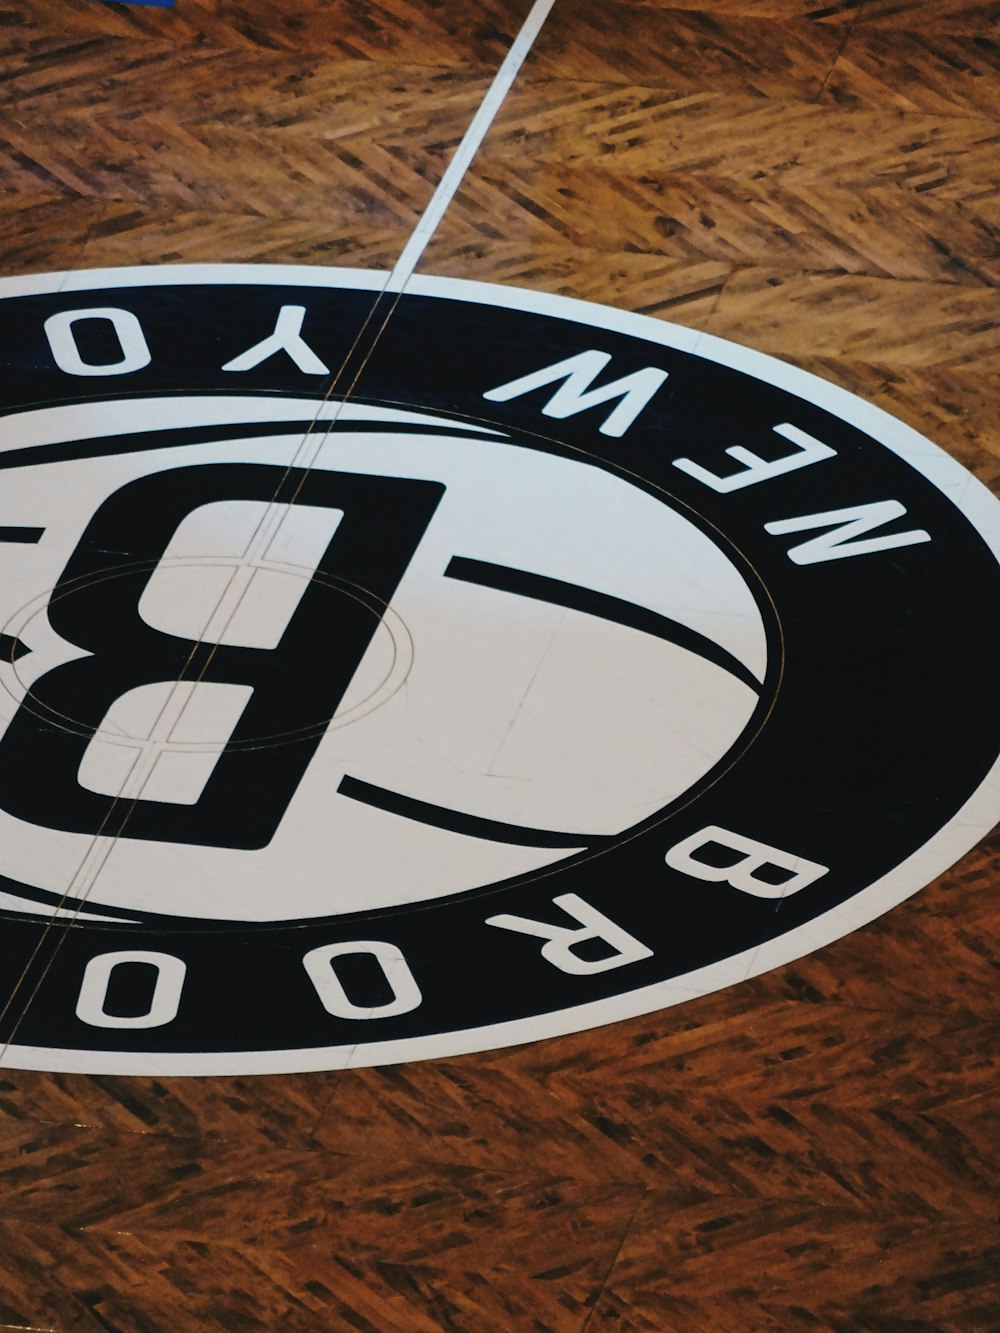 Brooklyn Nets Logo Photo Free Clock Image On Unsplash